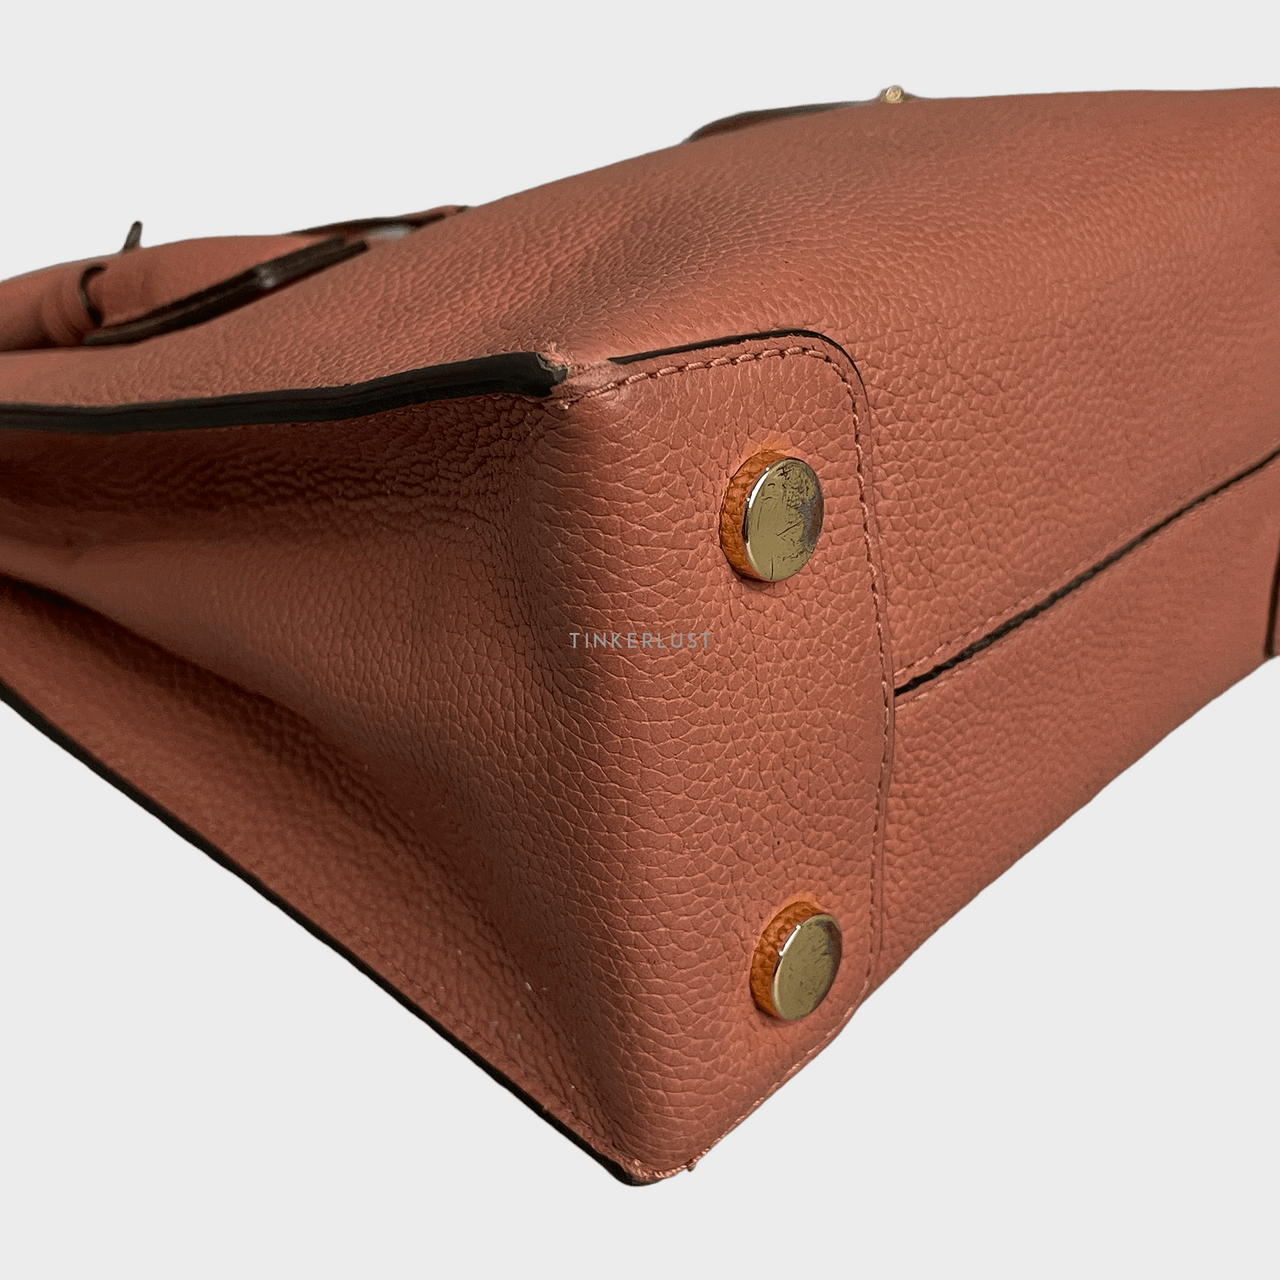 Michael Kors Mercer Dark Dusty Pink Leather GHW Handbag